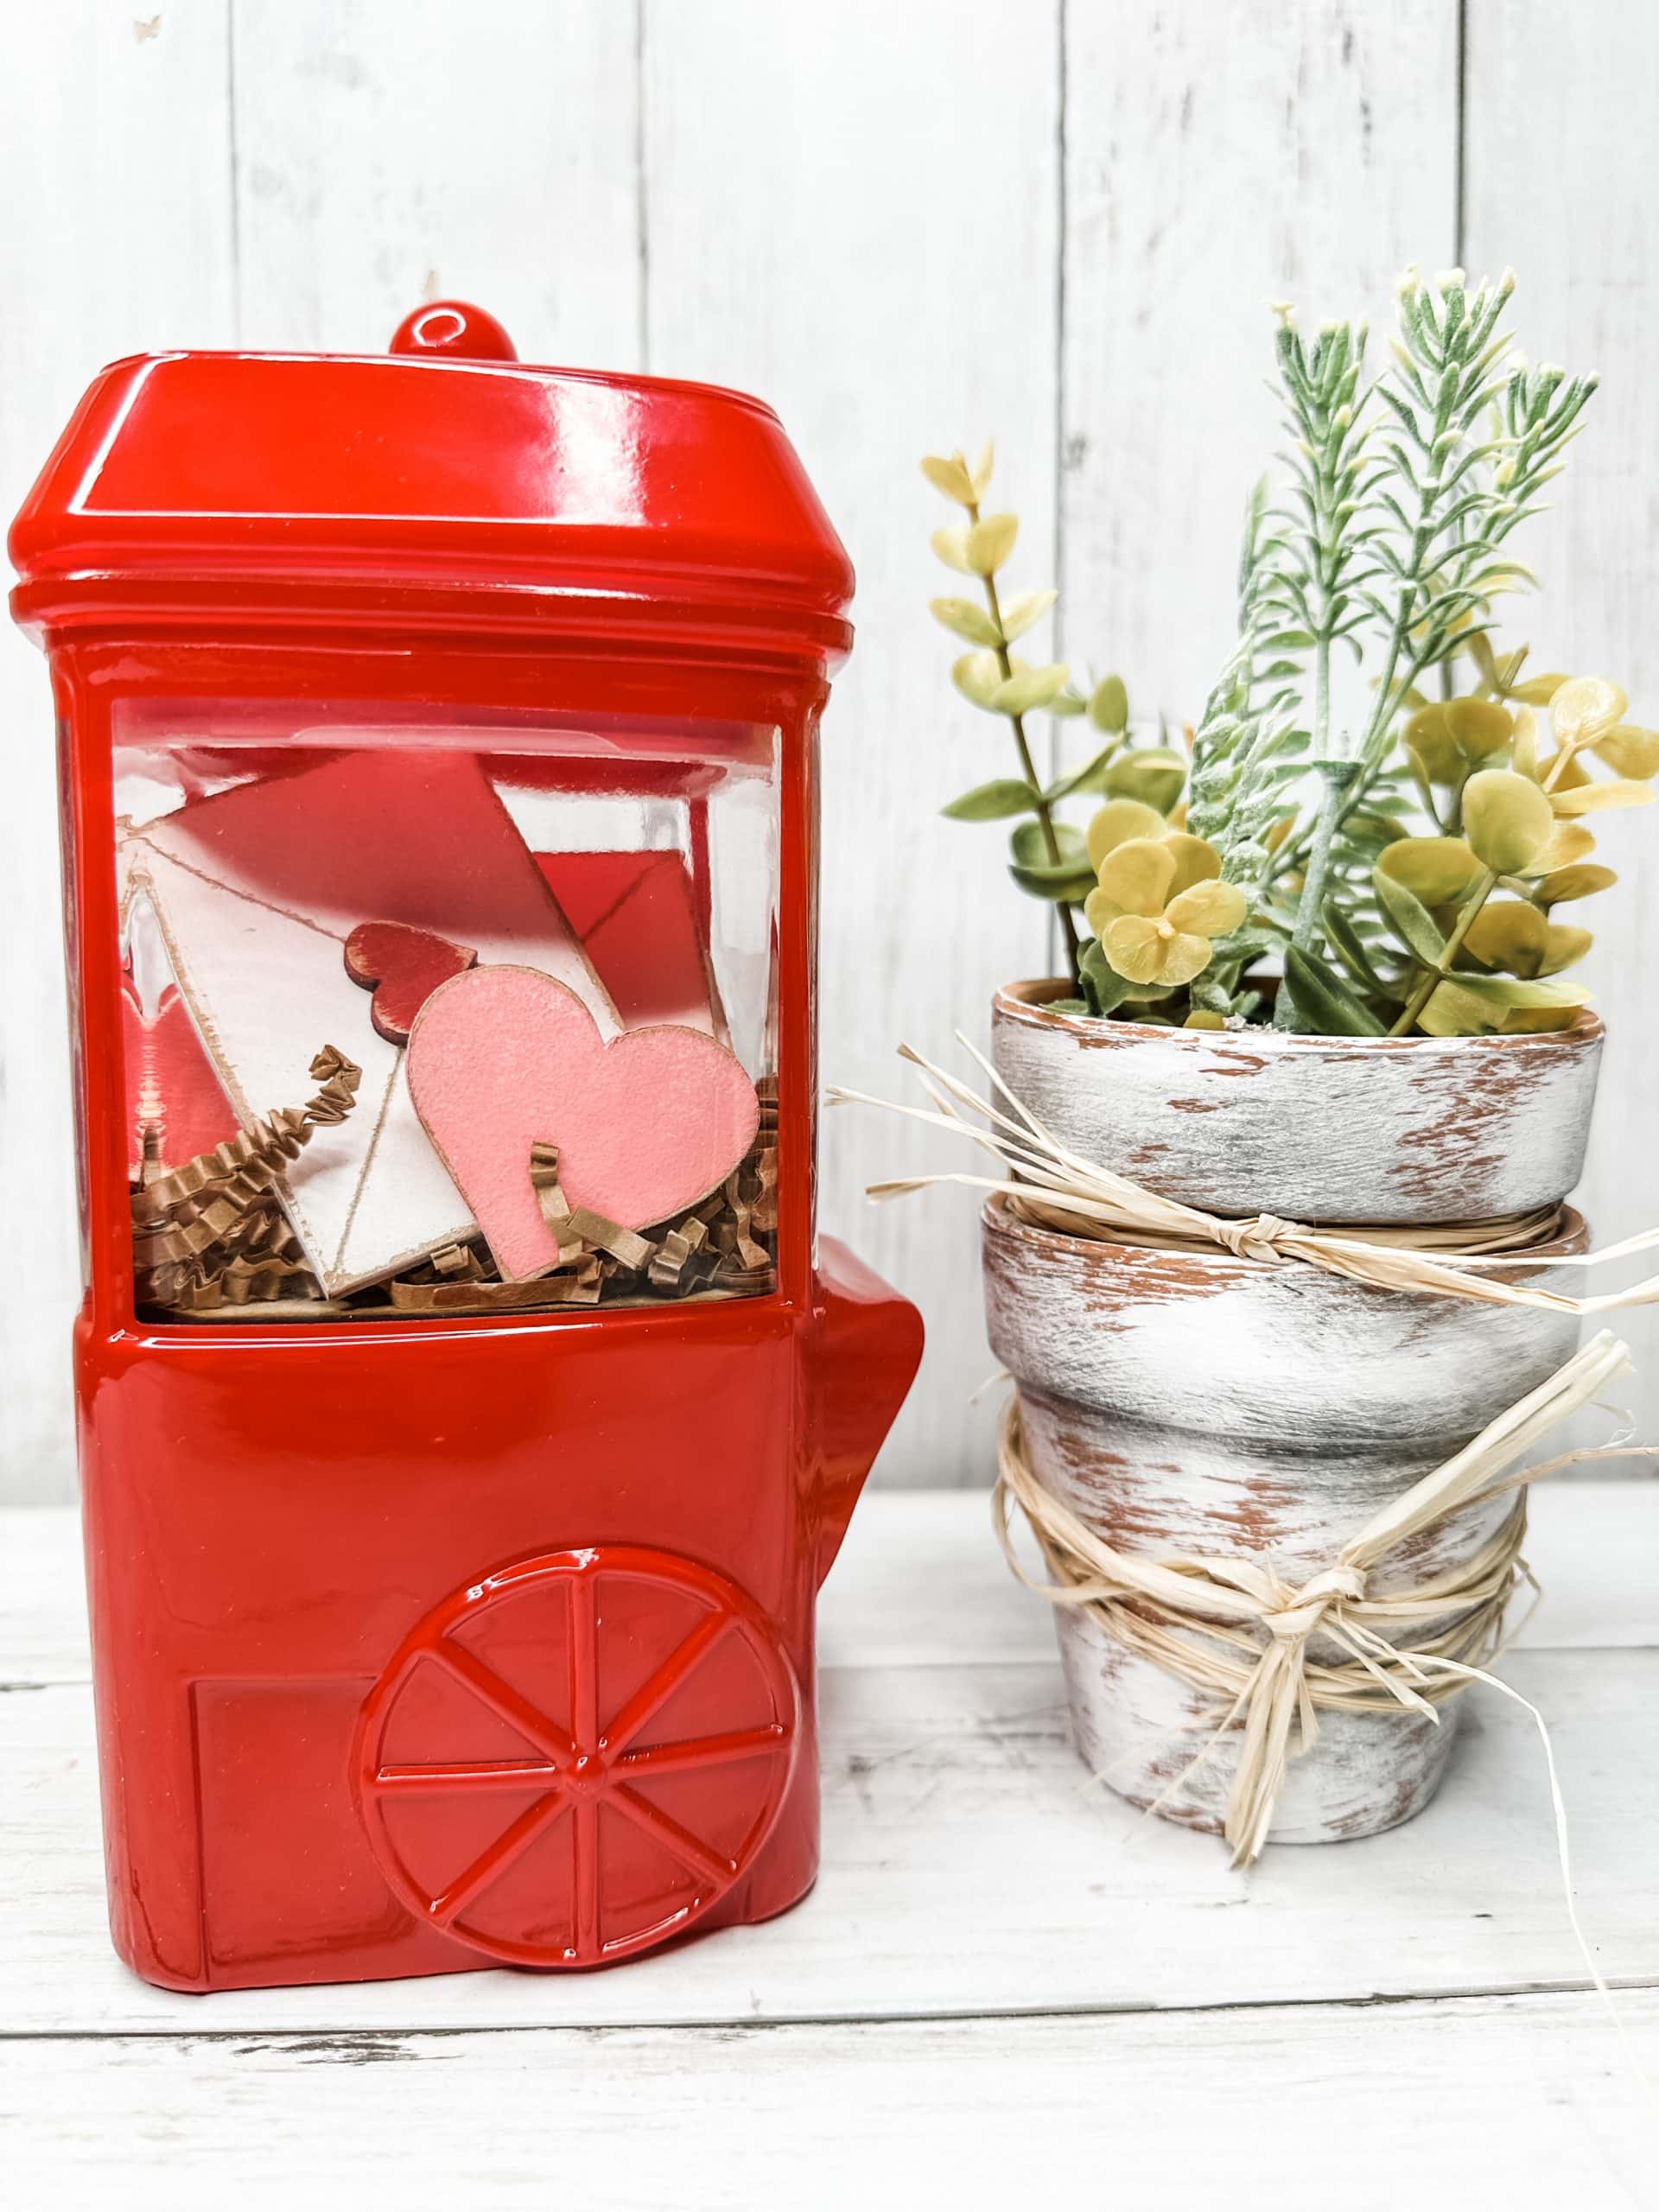 DIY Valentine's Day Jar Fillers